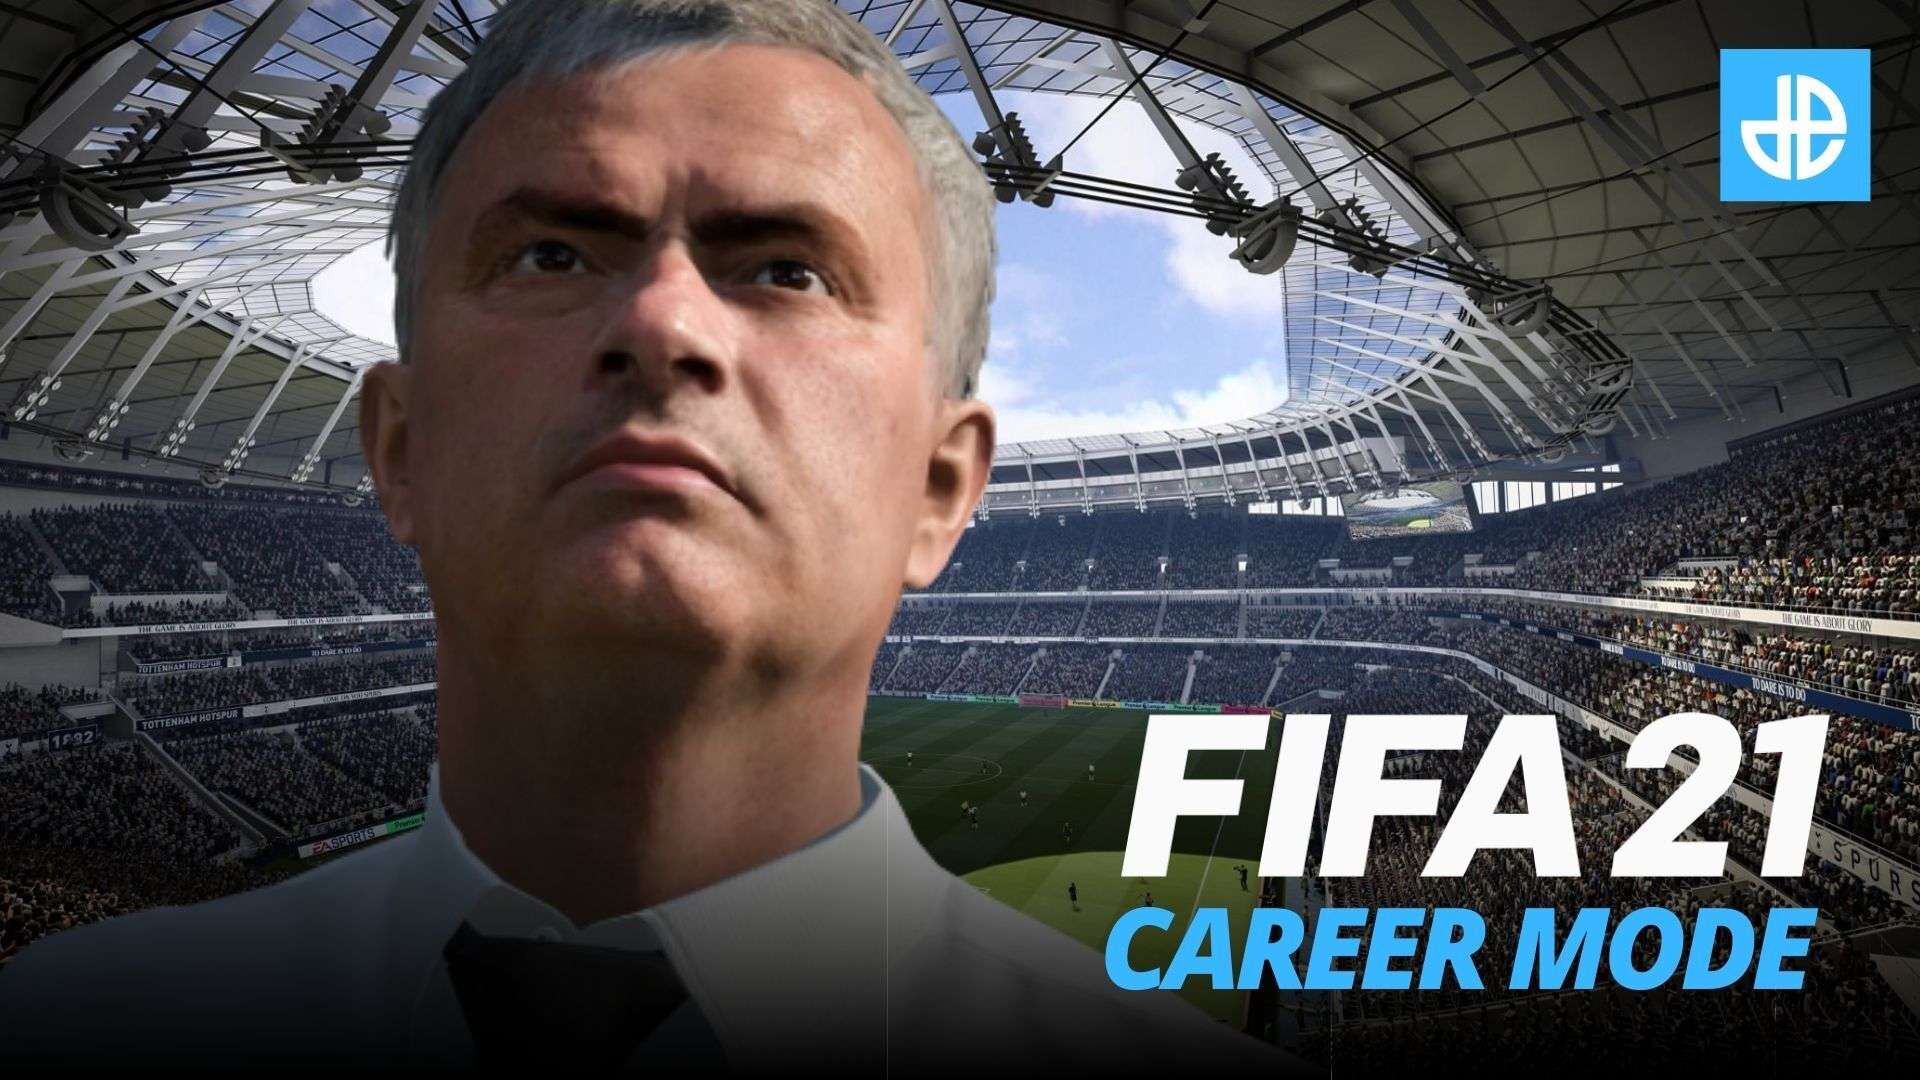 Mourinho on FIFA 21 Background